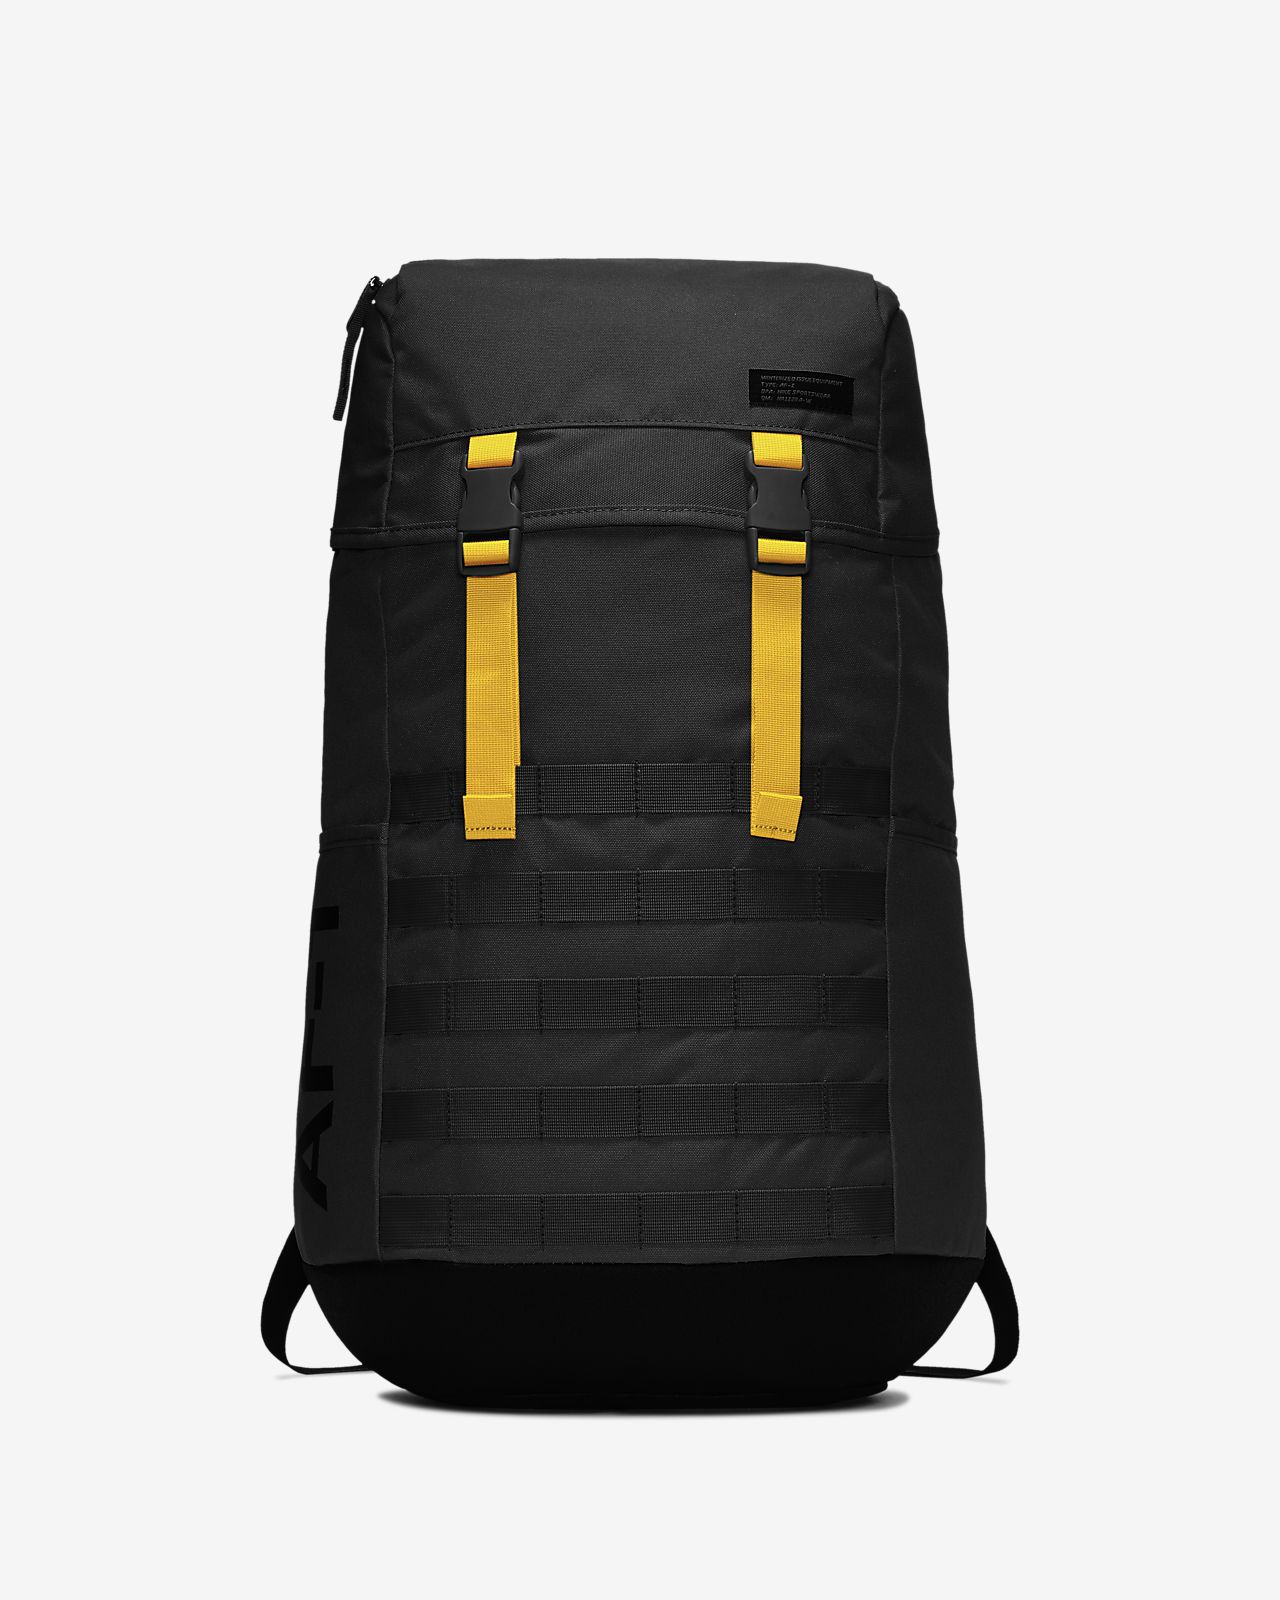 nike sportswear af1 backpack black